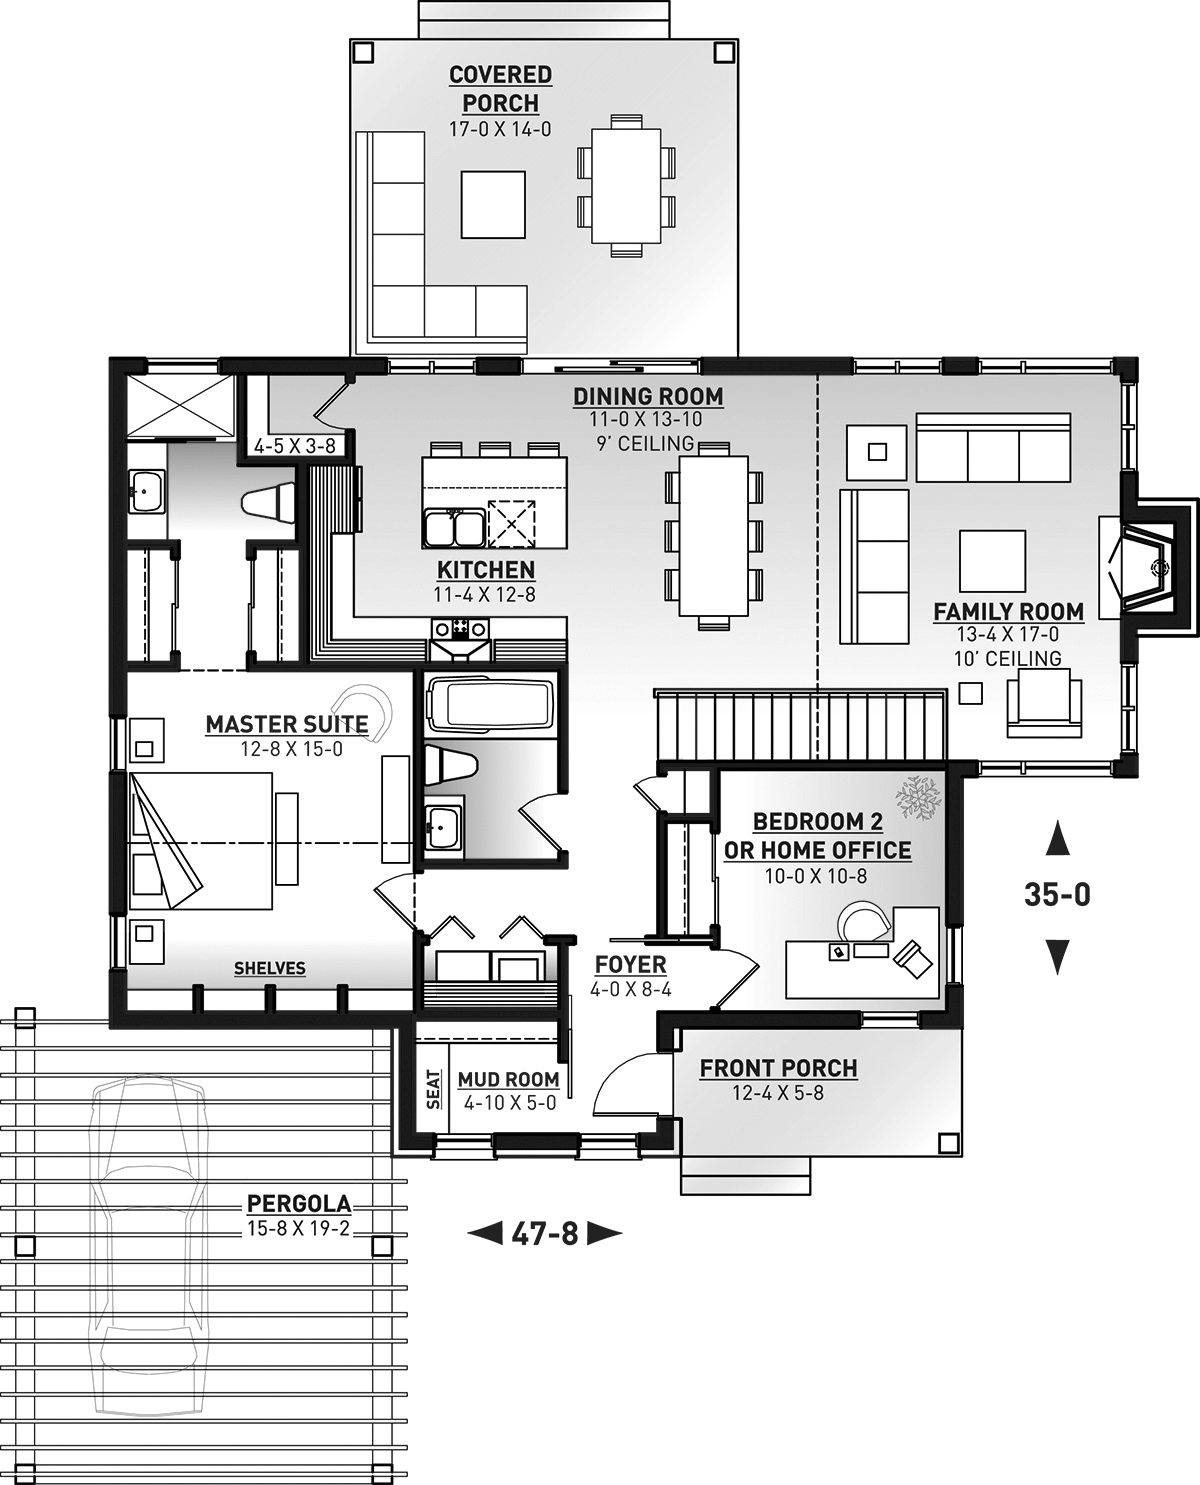 5 X 5 House Plans